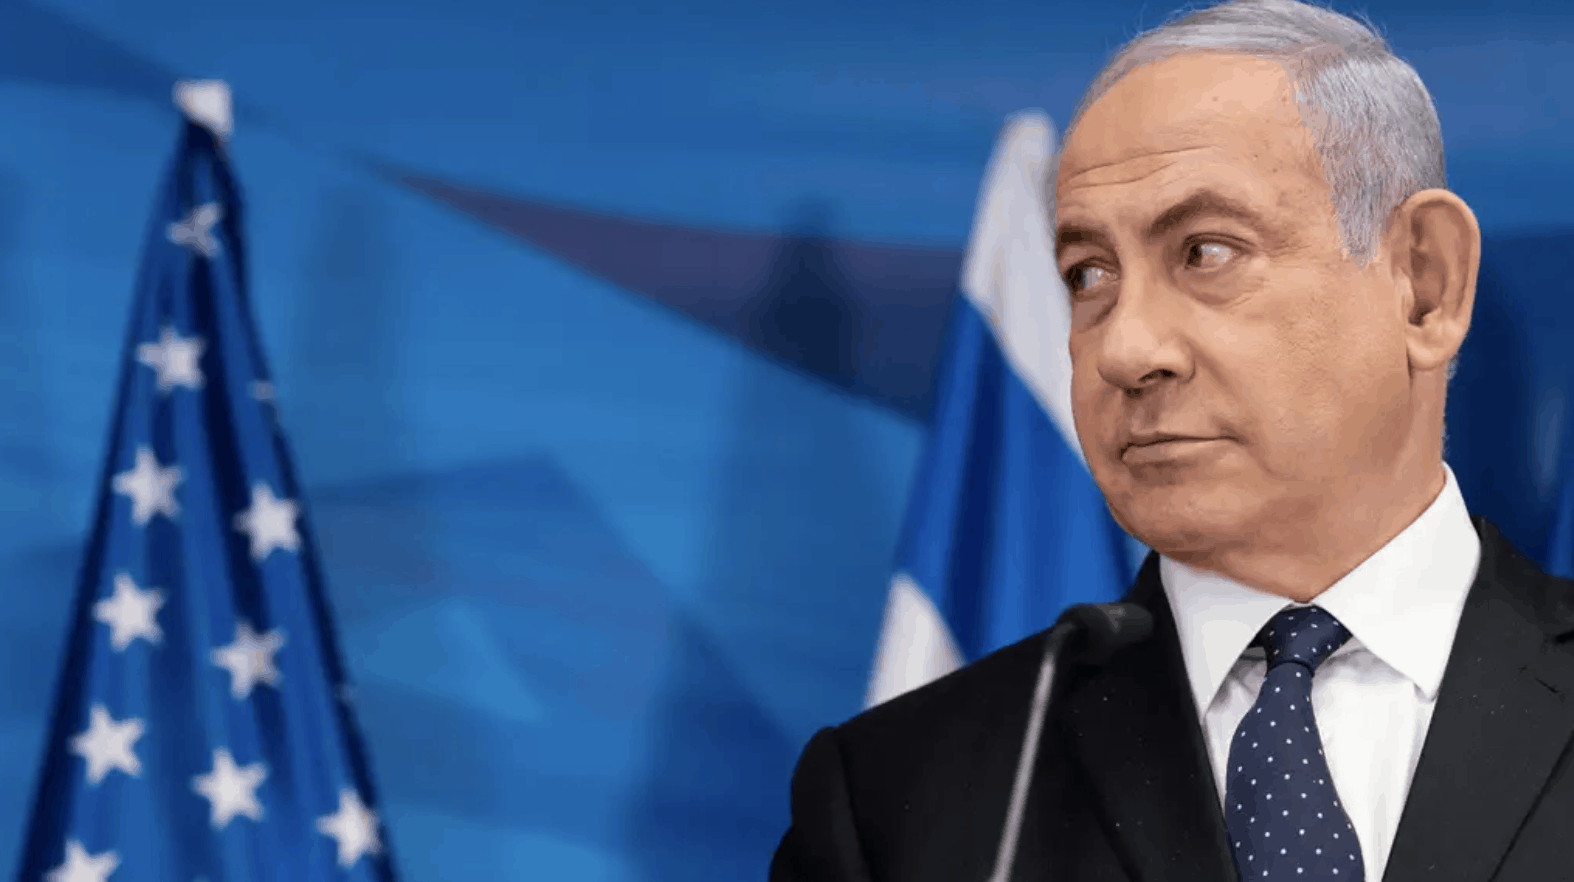 Former aide could seal end of Netanyahu’s rule in Israel